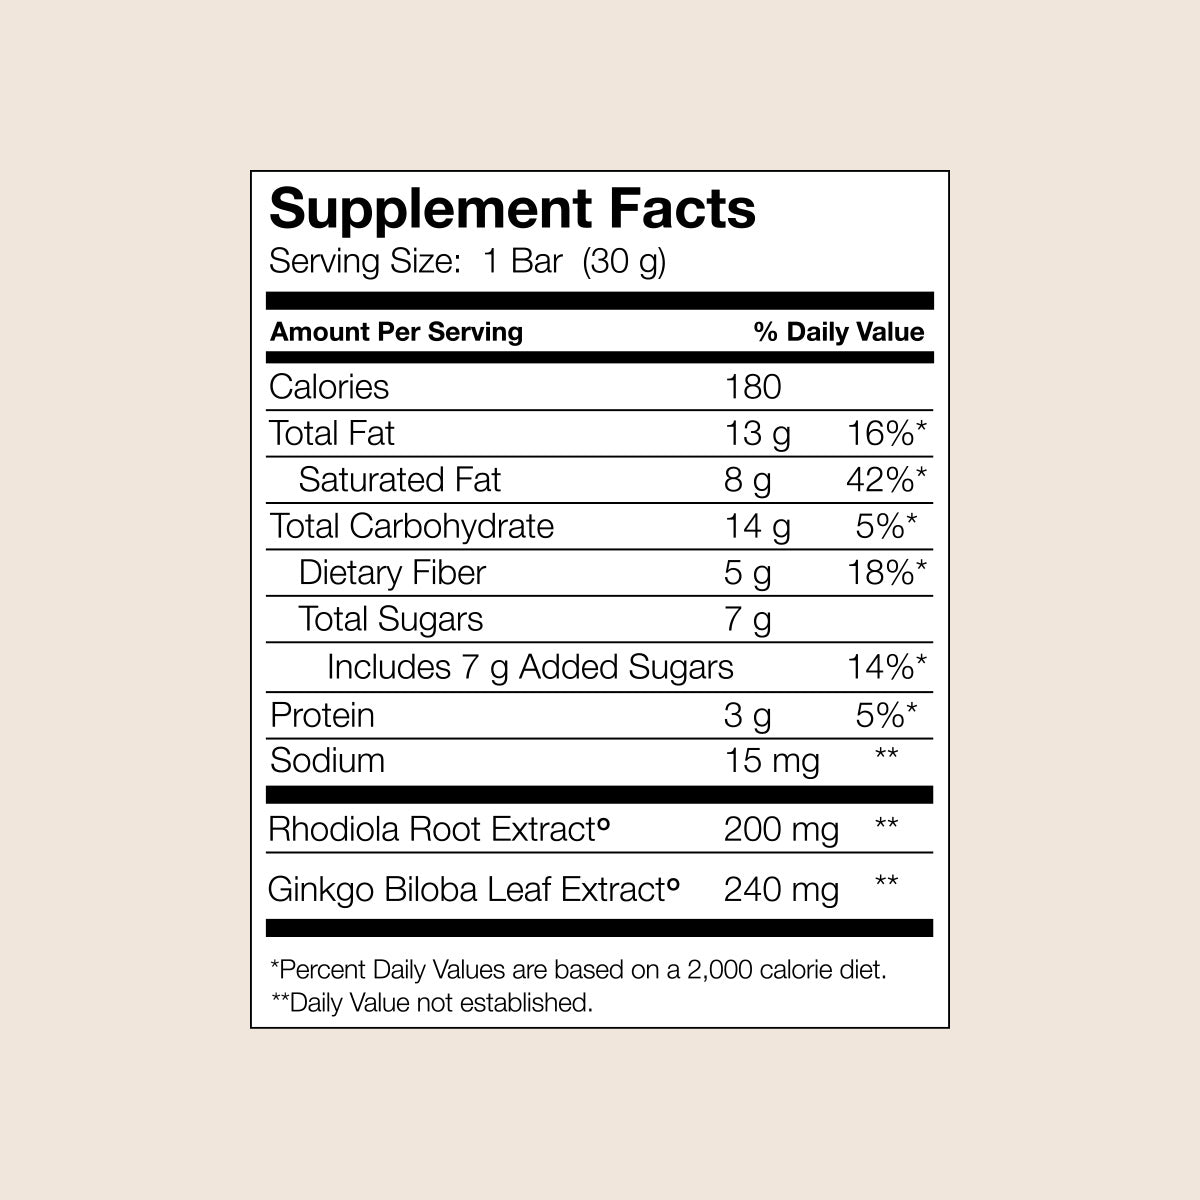 Focus Chocolate Supplement Facts

          